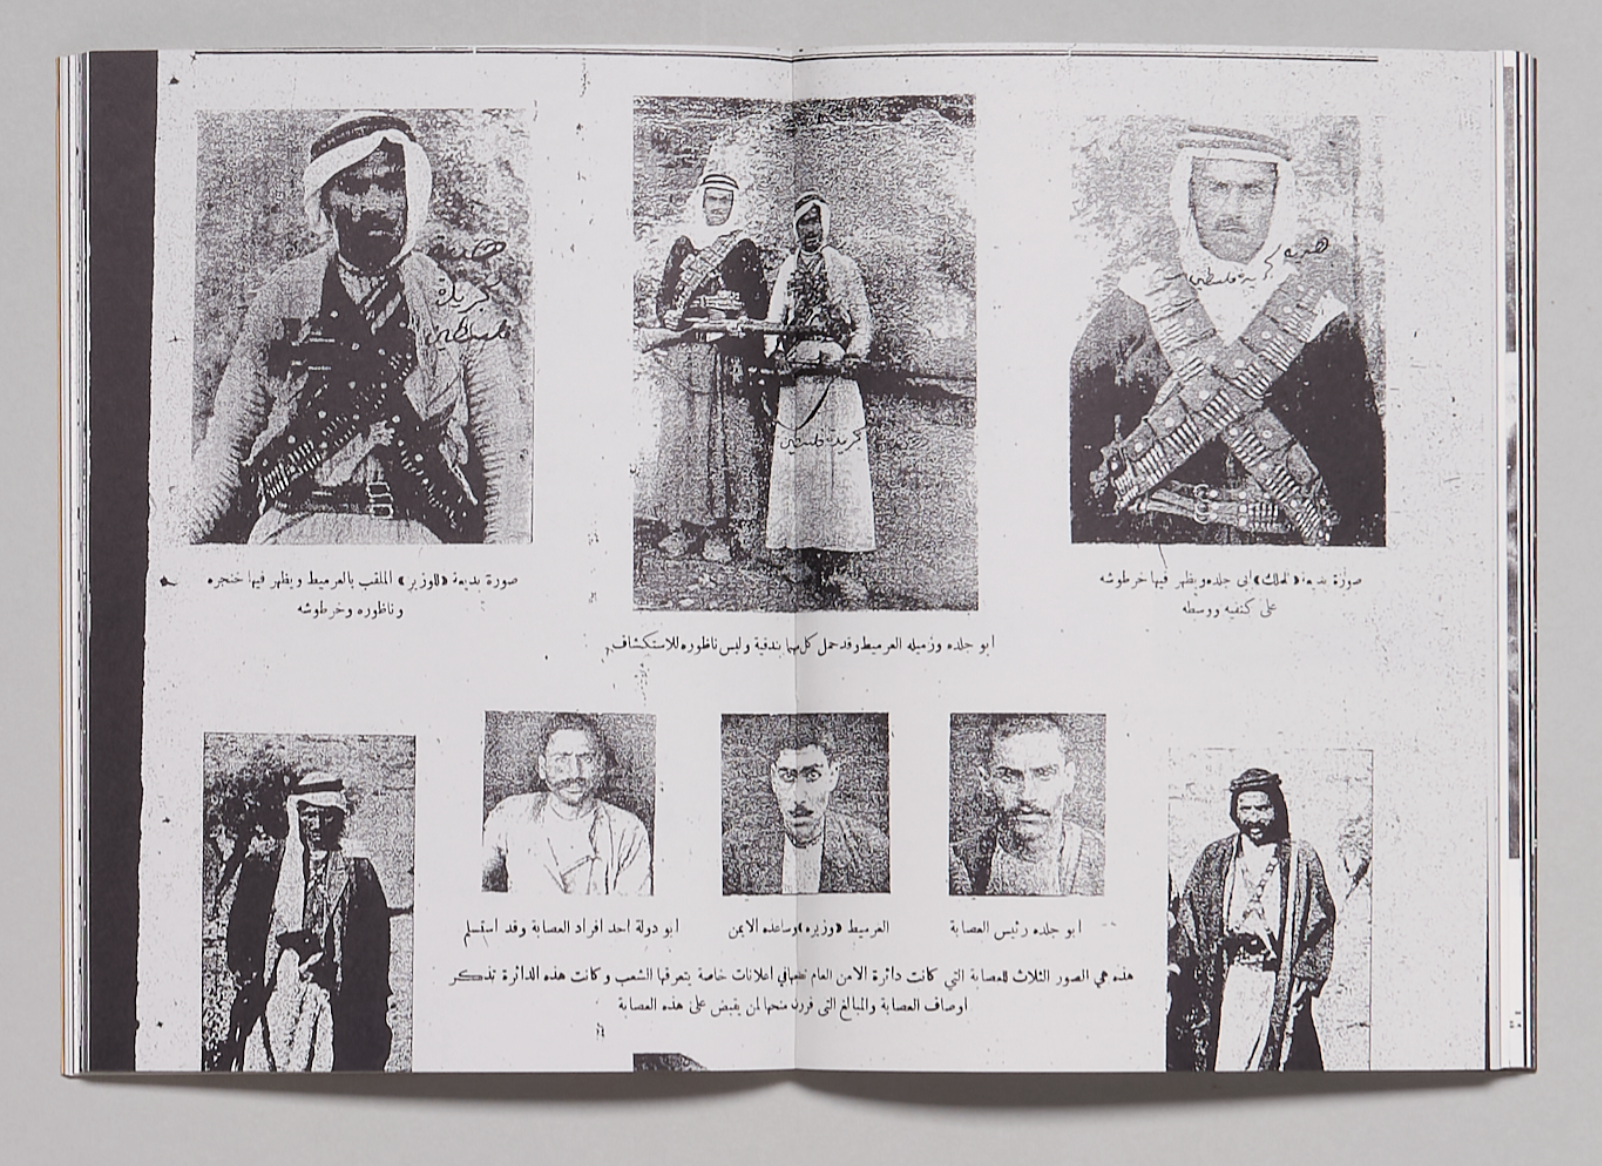 Abu Jildeh and Al-Armeet